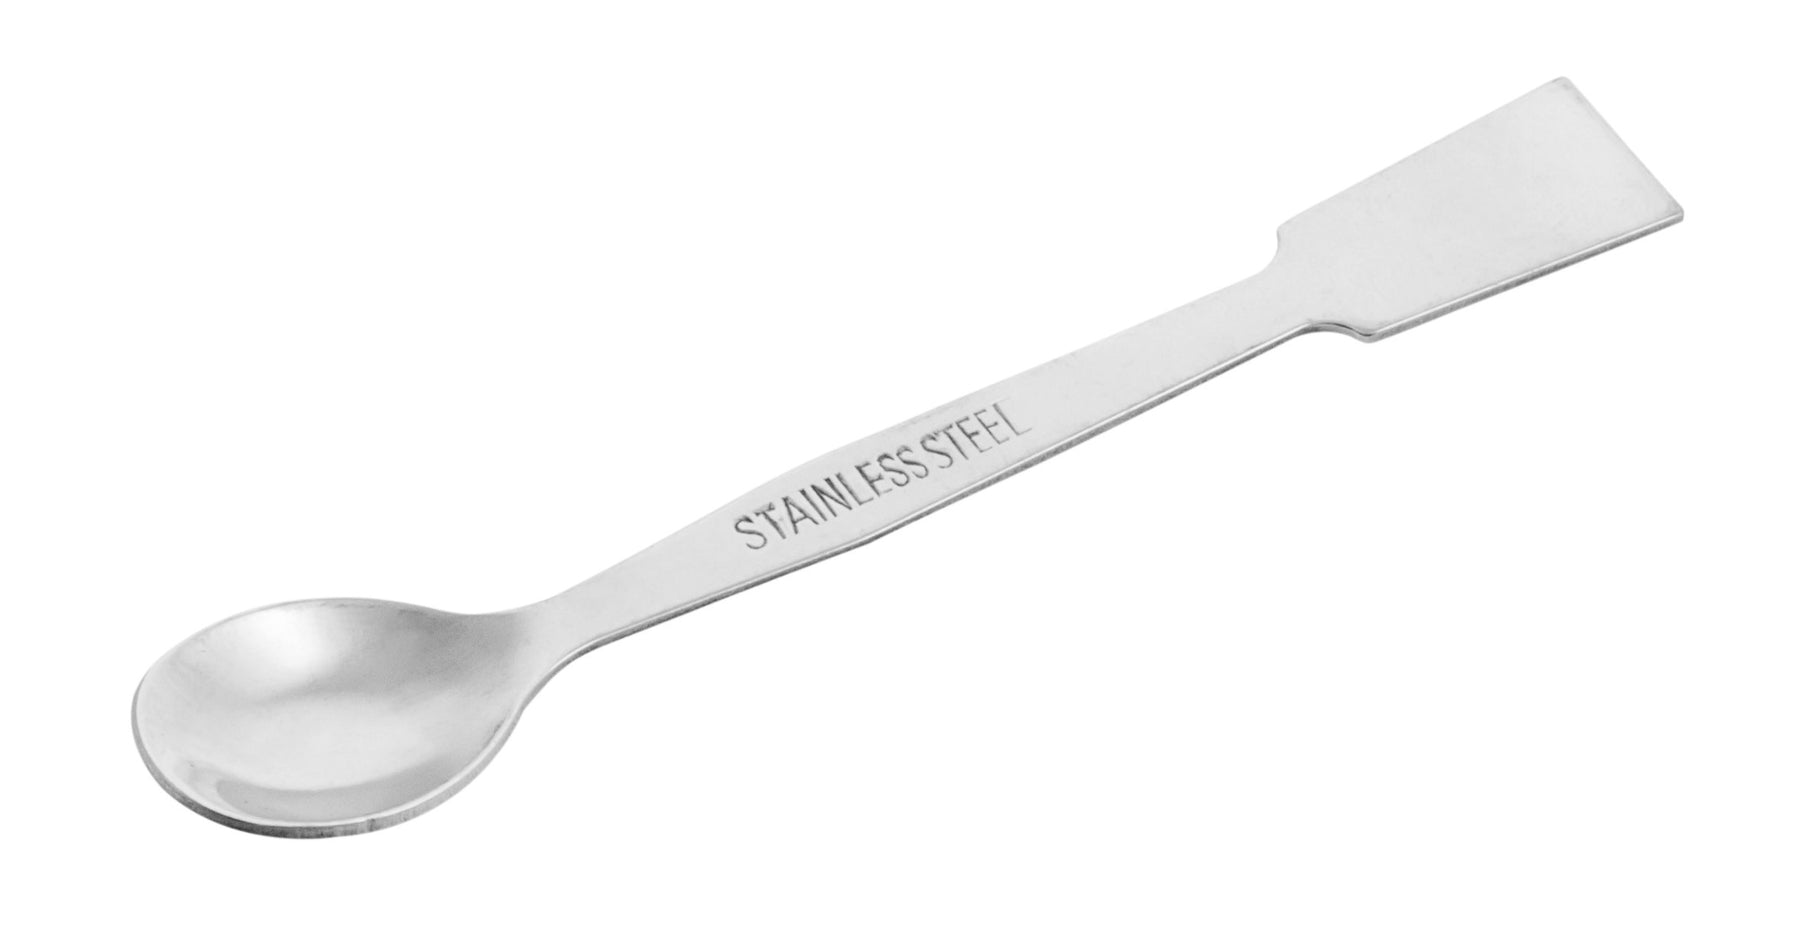 spatula laboratory apparatus